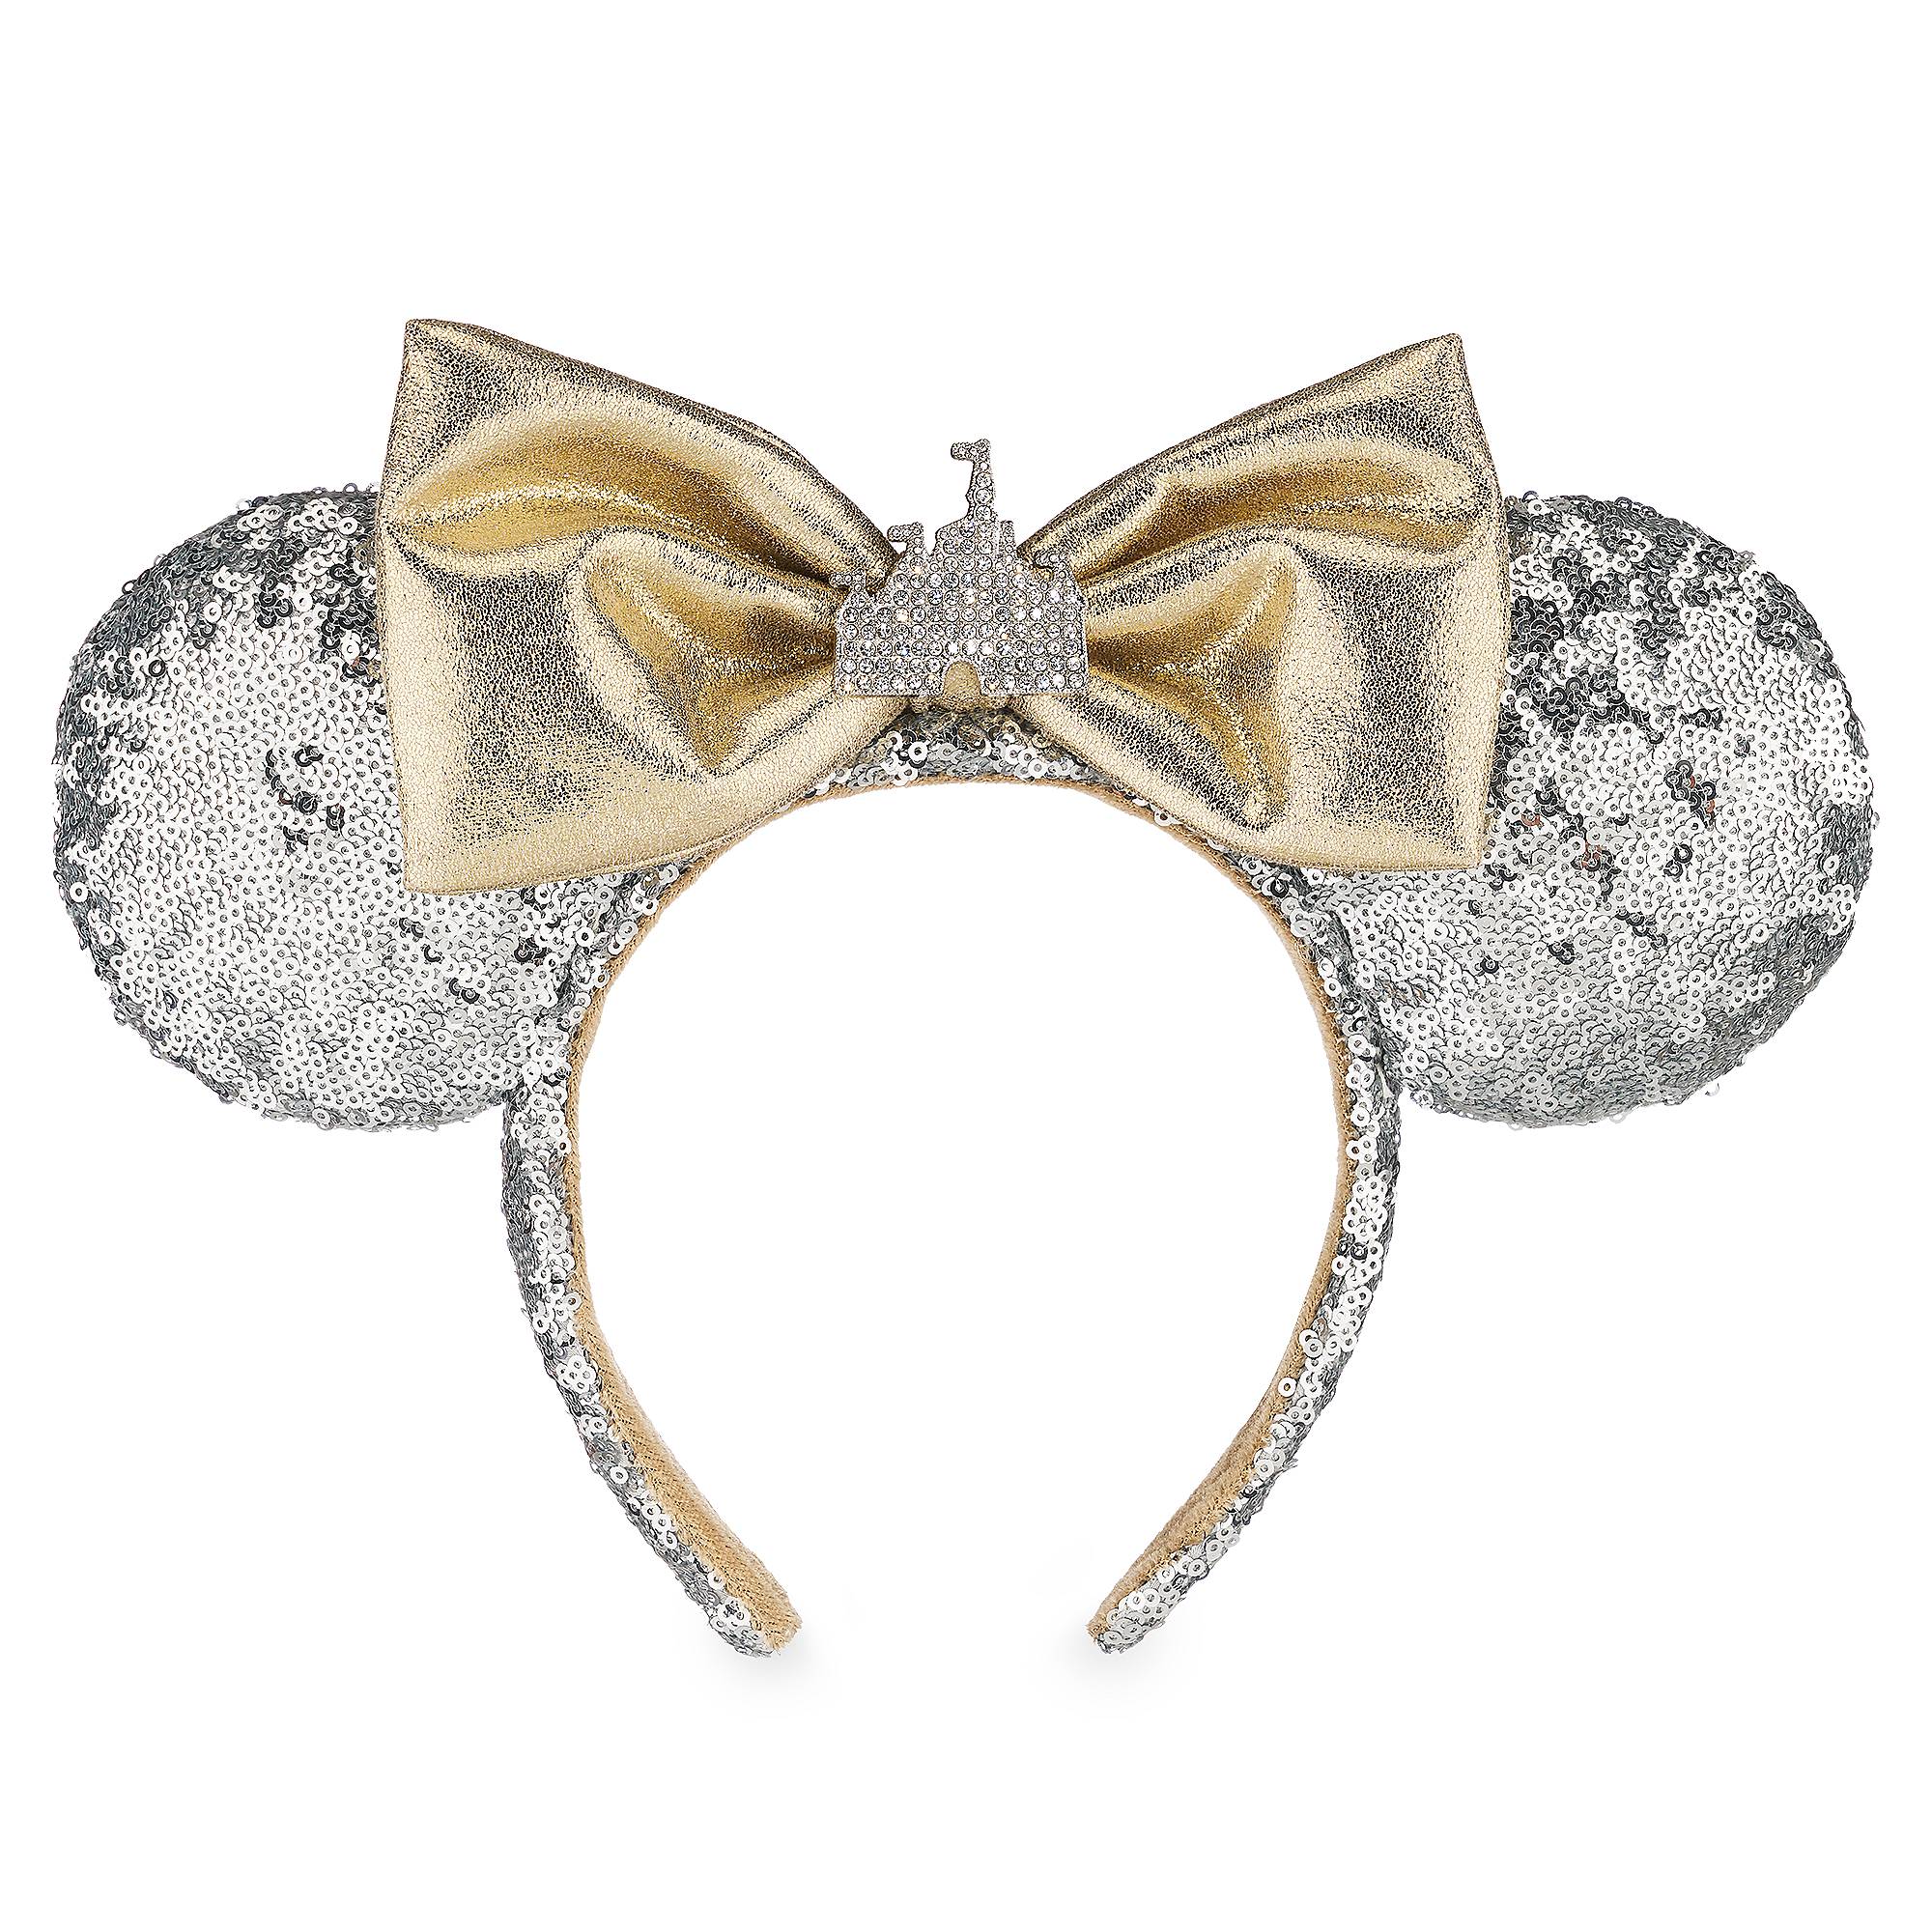 Details about   Disneyland Minnie Ears Bow Castle Jewel Silver Sequins Disney Parks Headband 